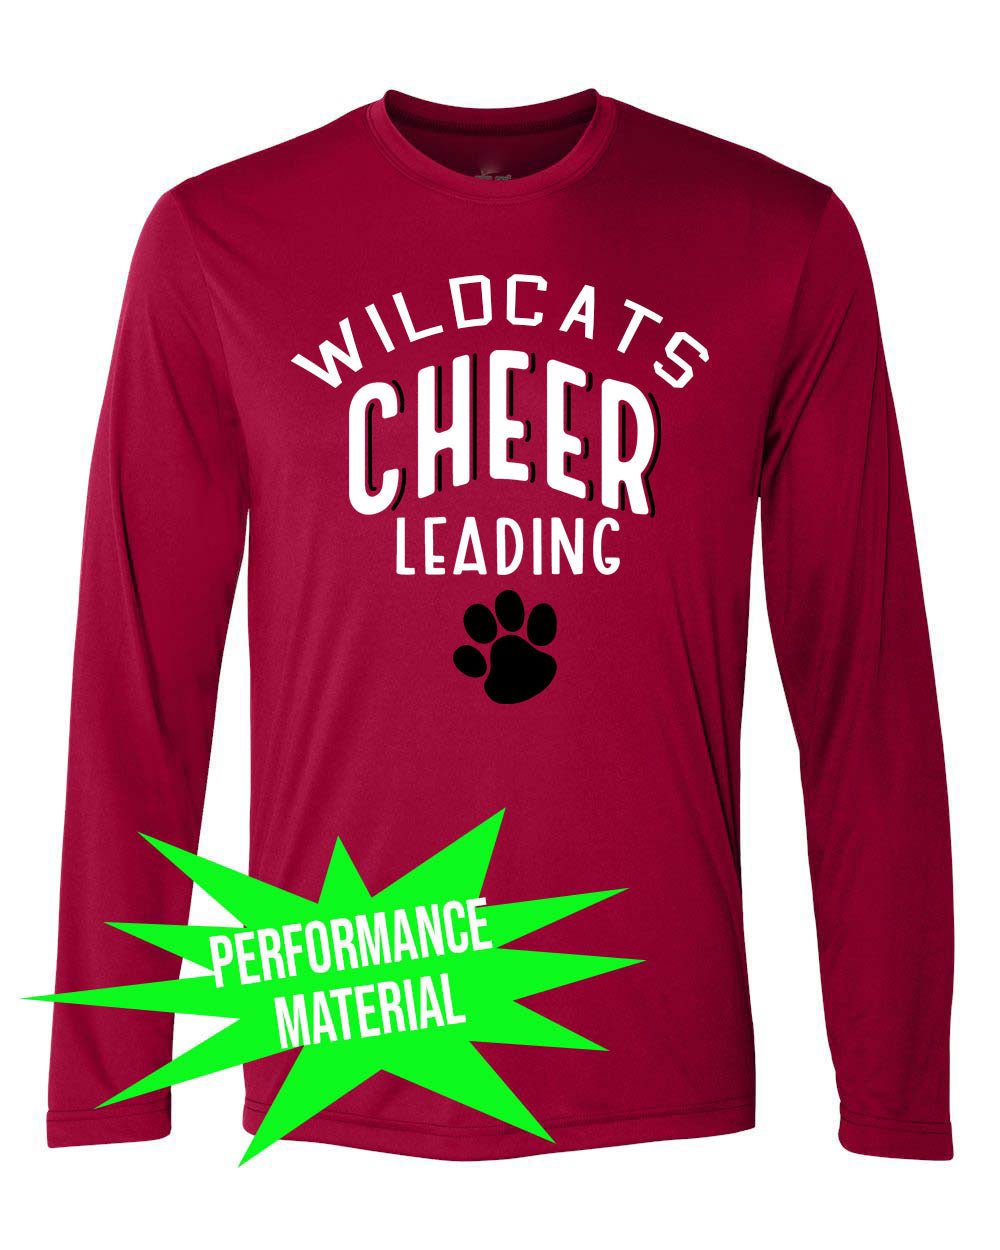 Wildcats cheer Performance Material Design 5 Long Sleeve Shirt